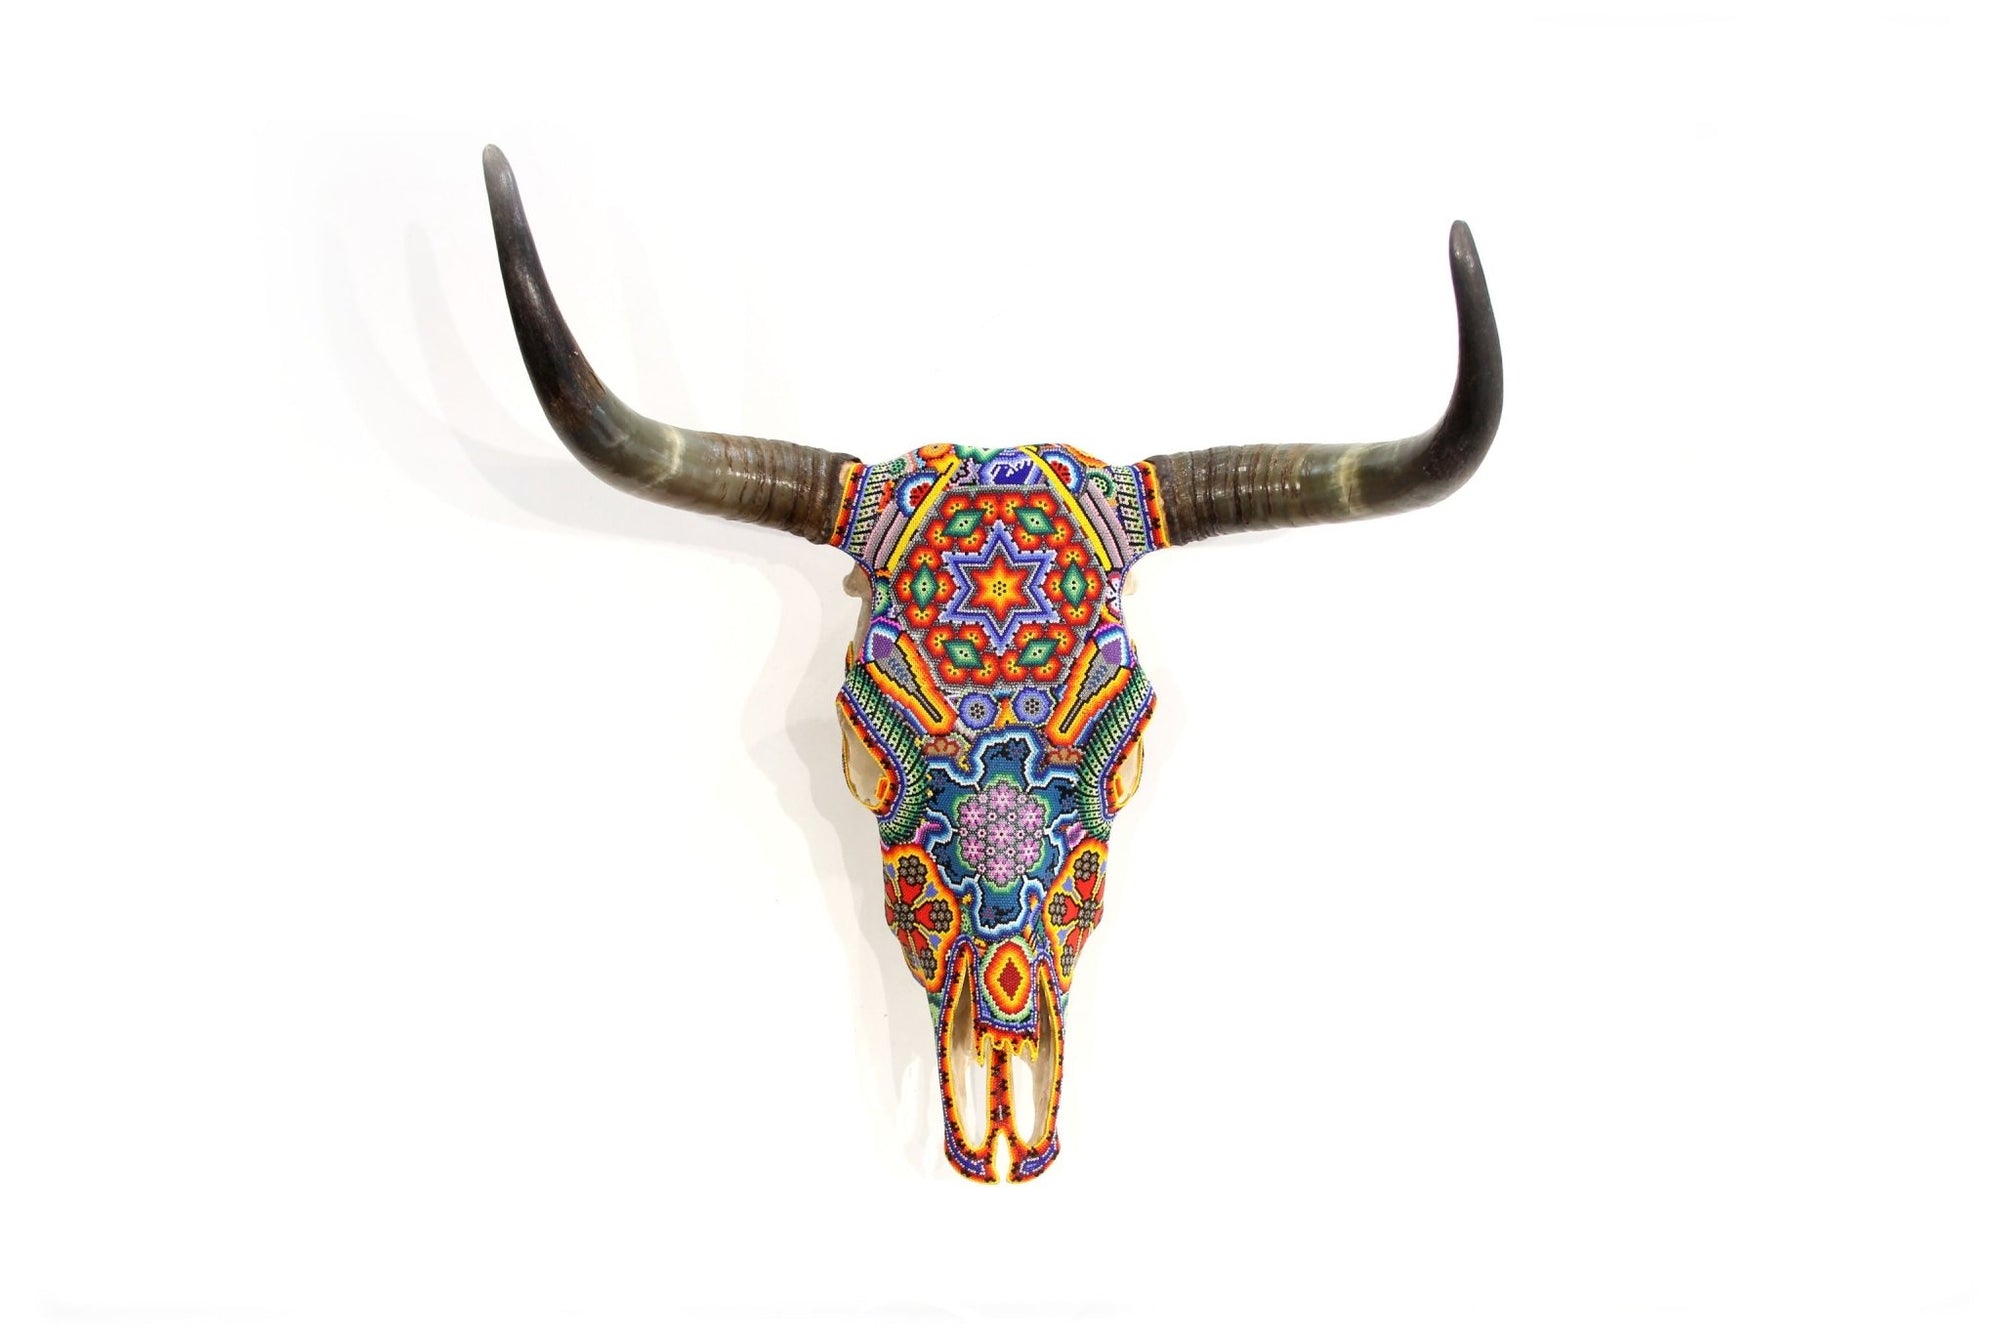 Teschio di mucca Arte Huichol - Wa x+rikiya - Arte Huichol - Marakame